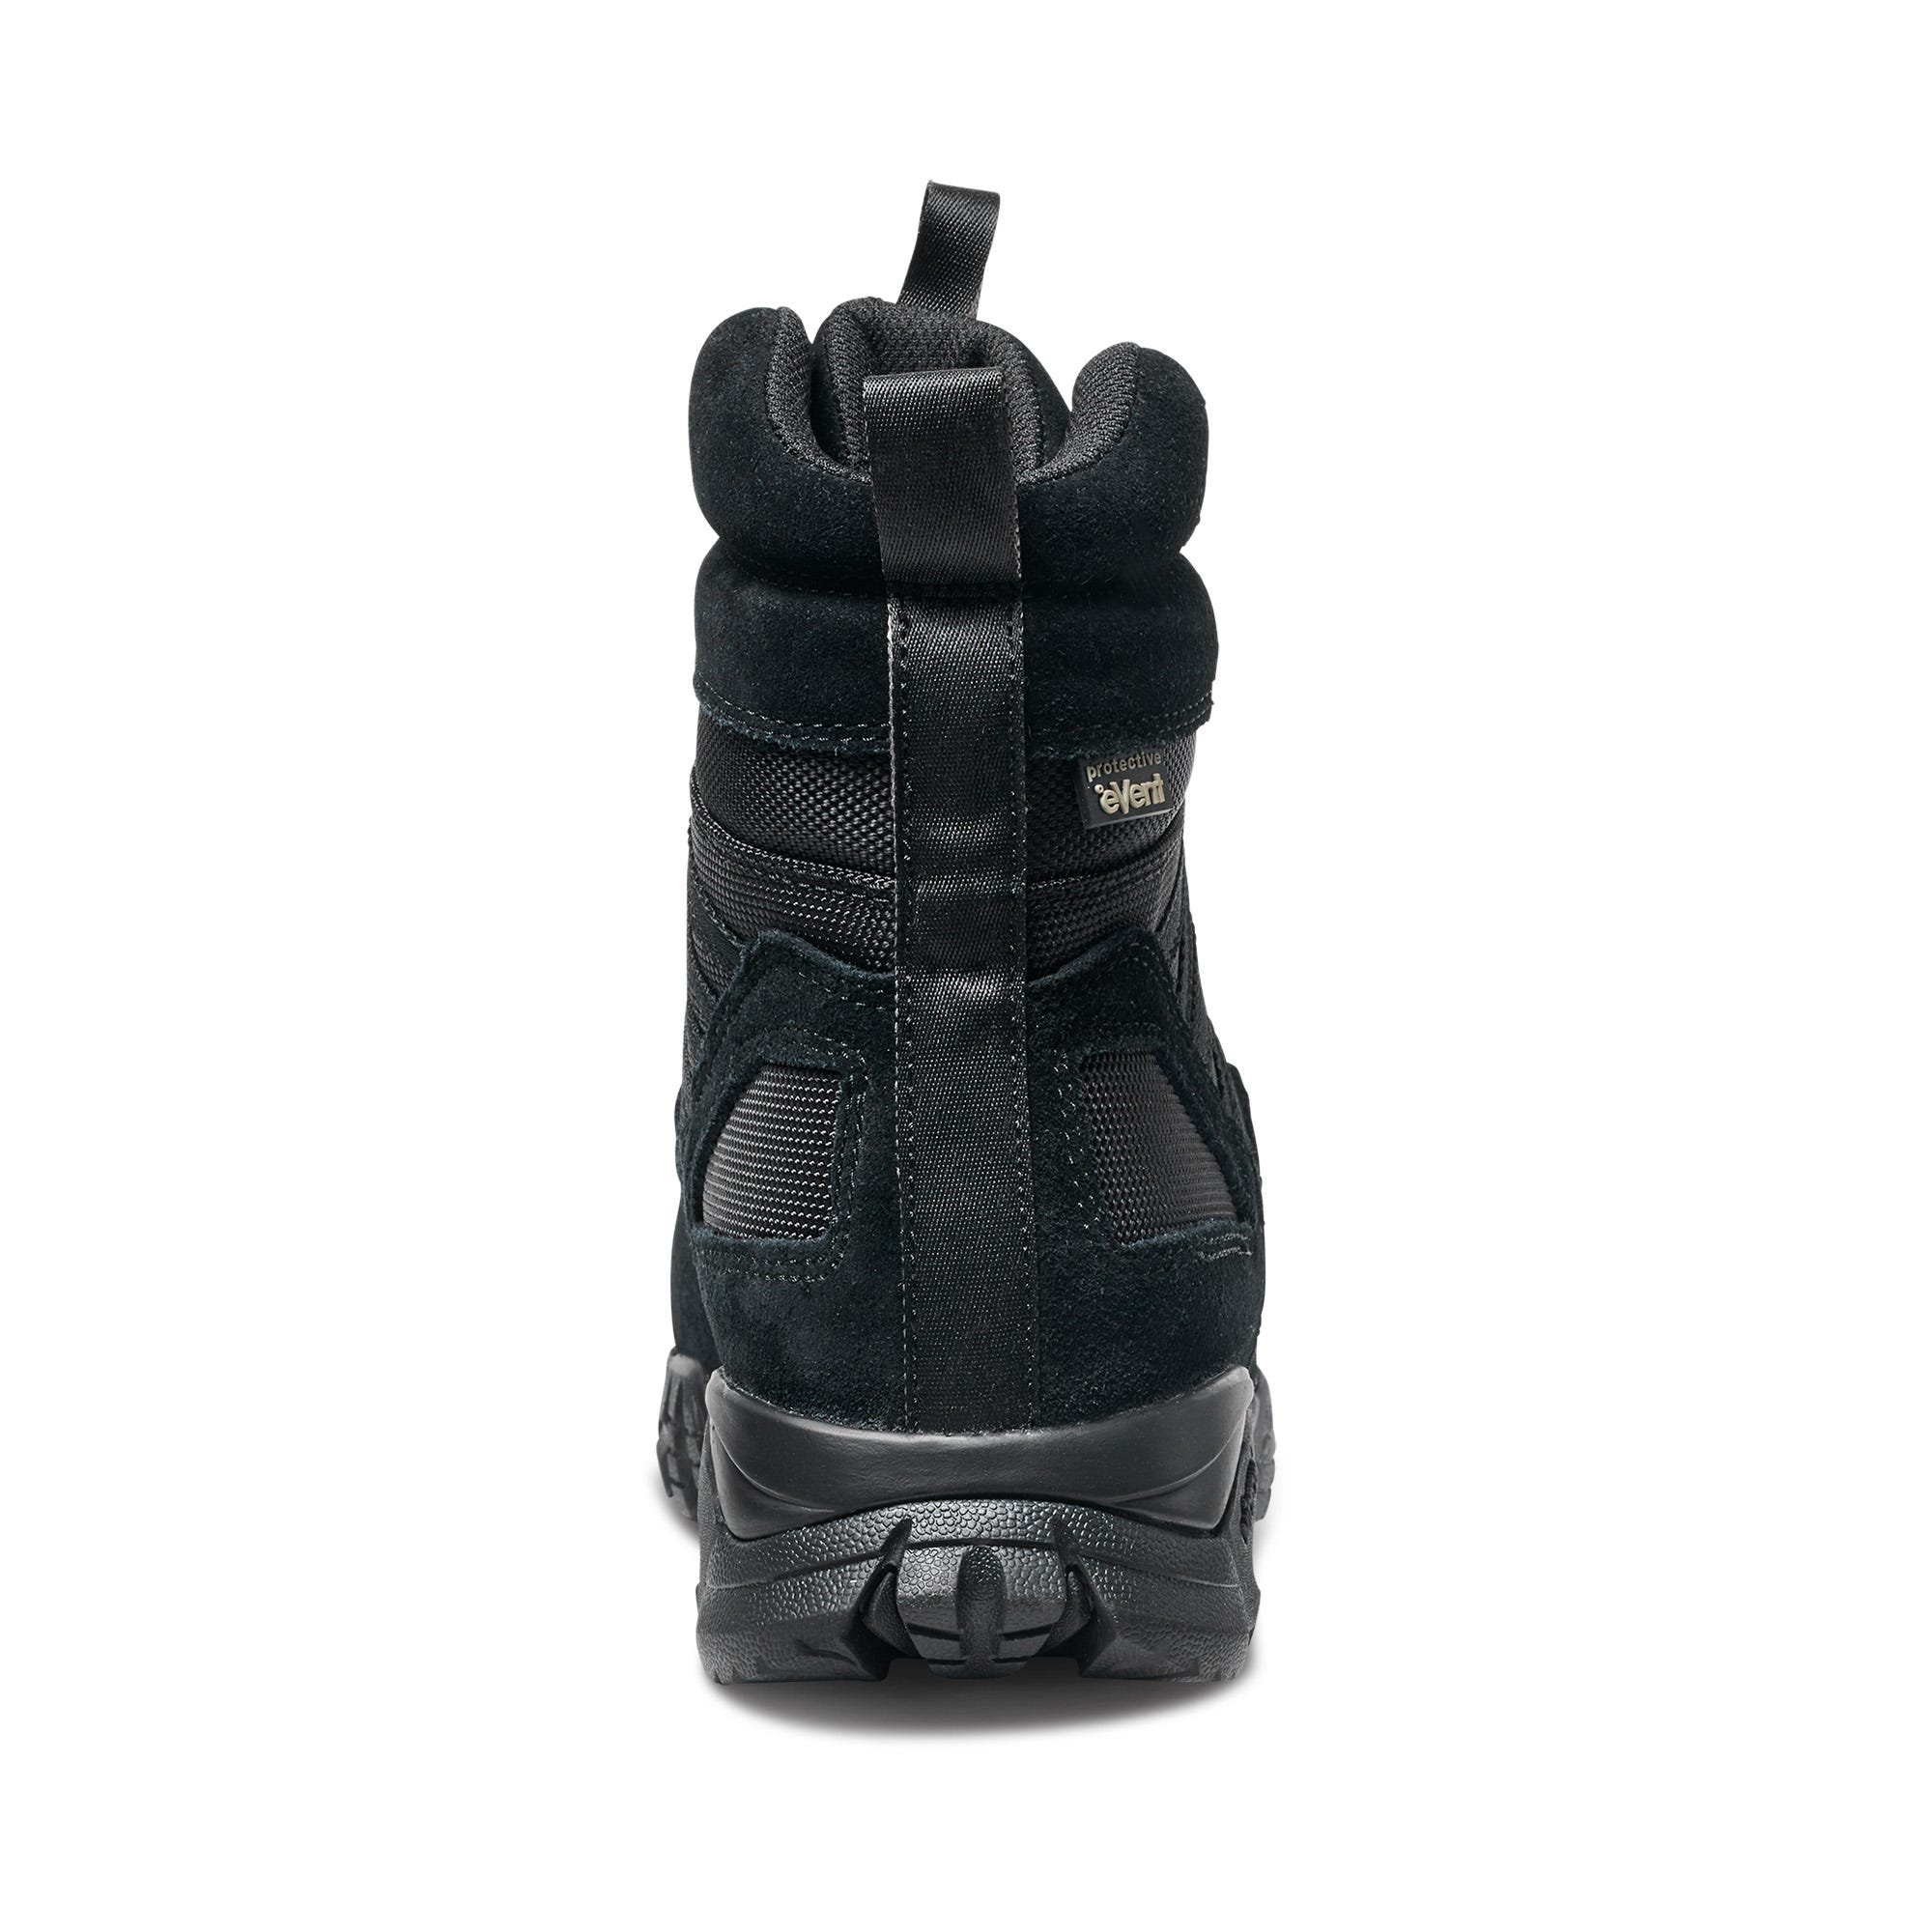 5.11 Work Gear Men's Union Waterproof 6-Inch Work Boots, Shock Absorbing Insole, Black, 7.5 Wide, Style 12390 - image 3 of 8